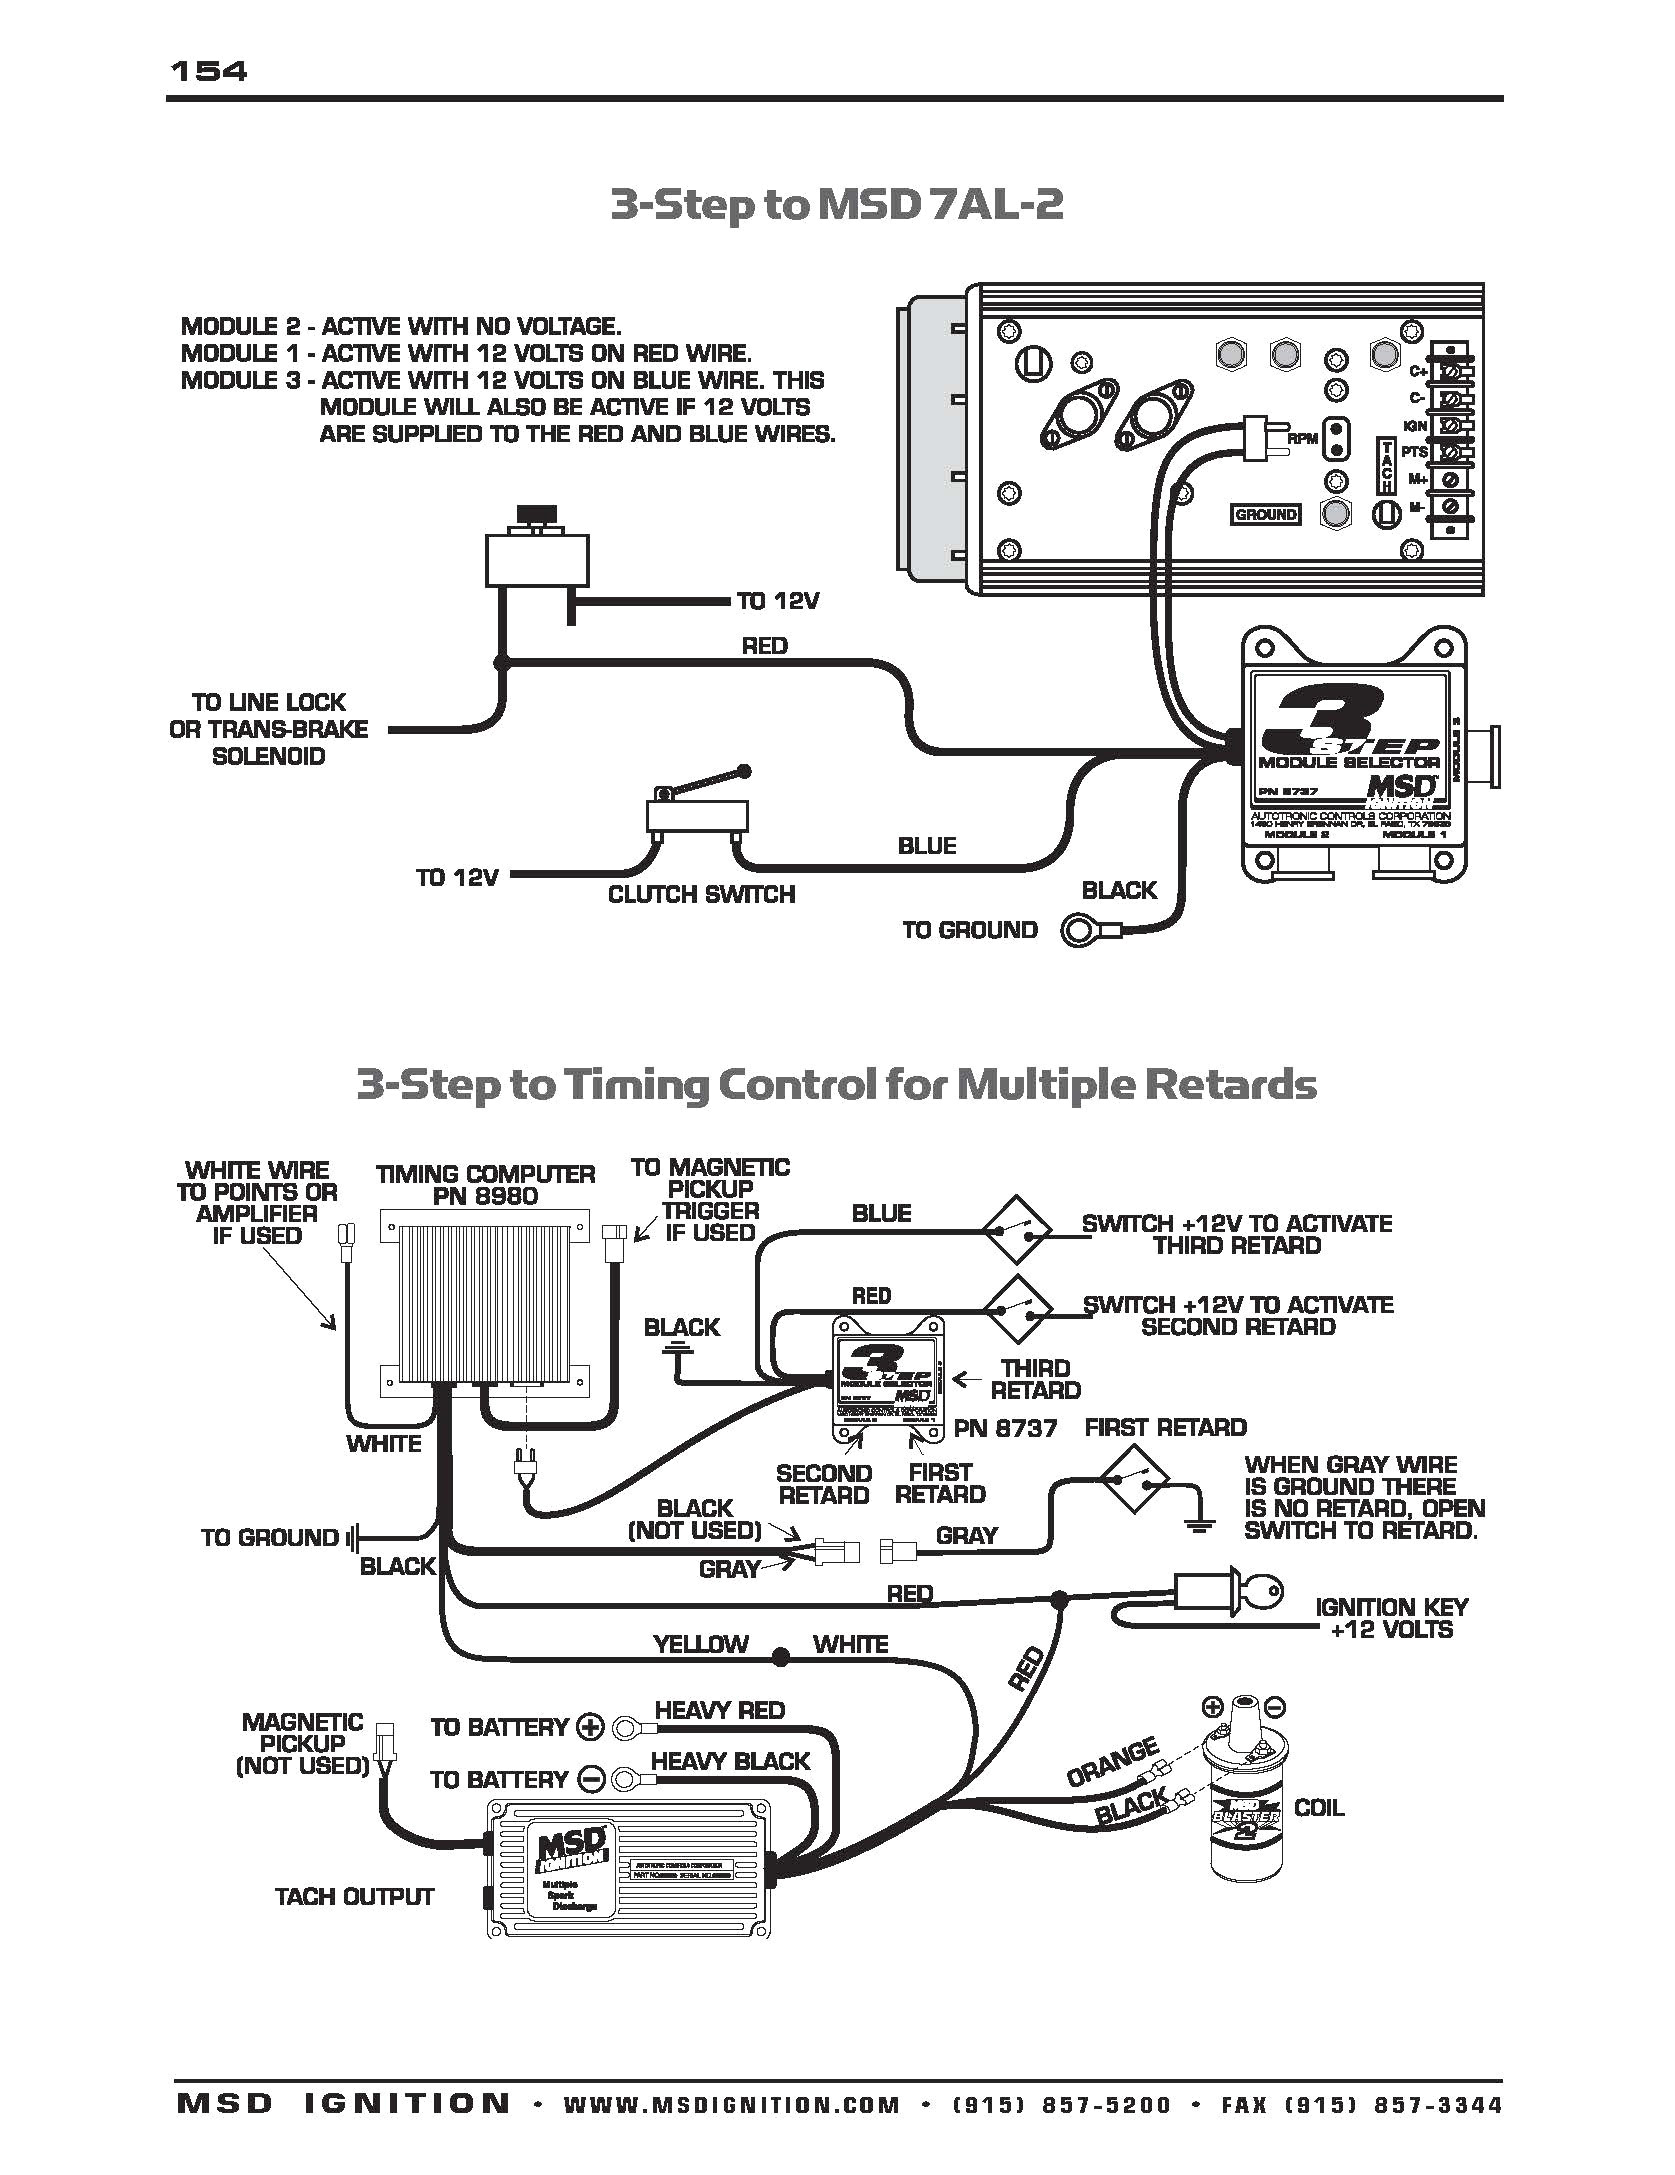 msd 5 wiring diagram wiring diagram review mix msd 5 wiring diagram wiring diagram can msd